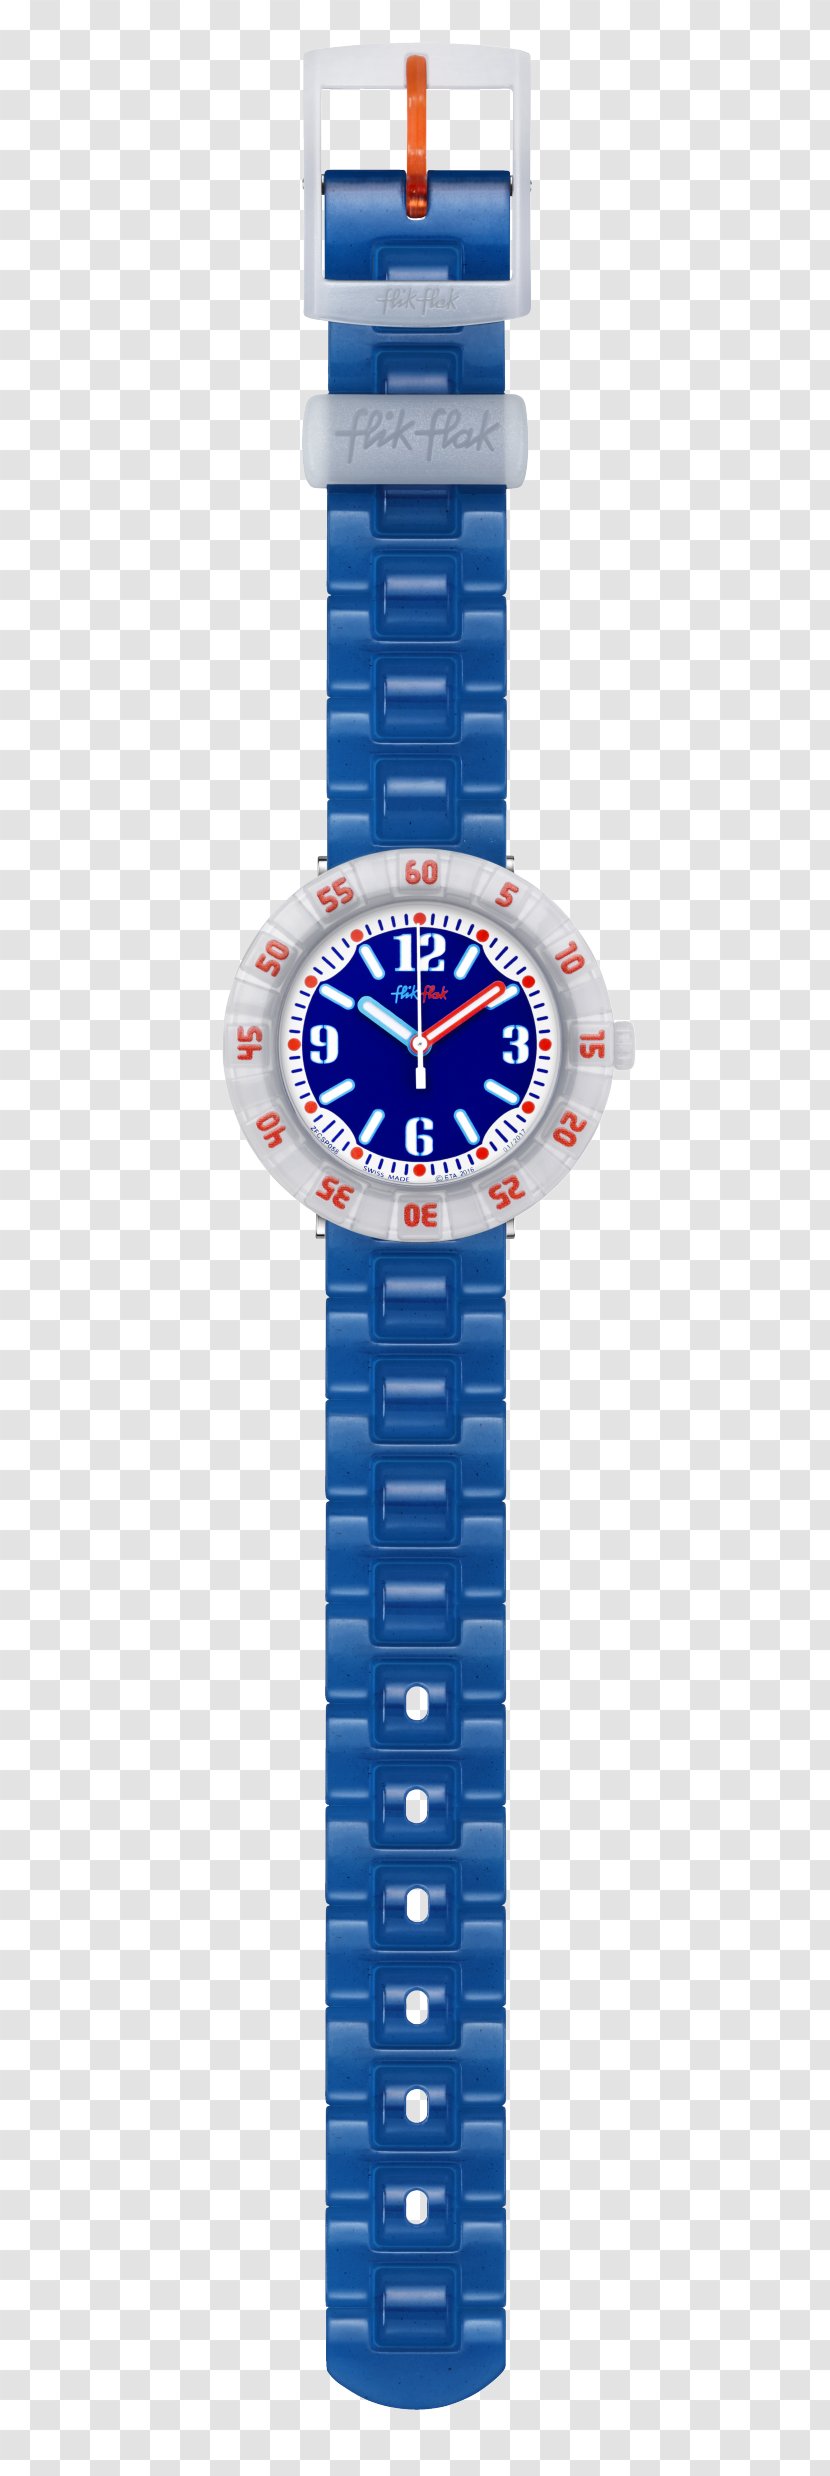 Swatch Flik Flak Power Time Amazon.com Clothing Buckle - Jewellery - Watch Transparent PNG